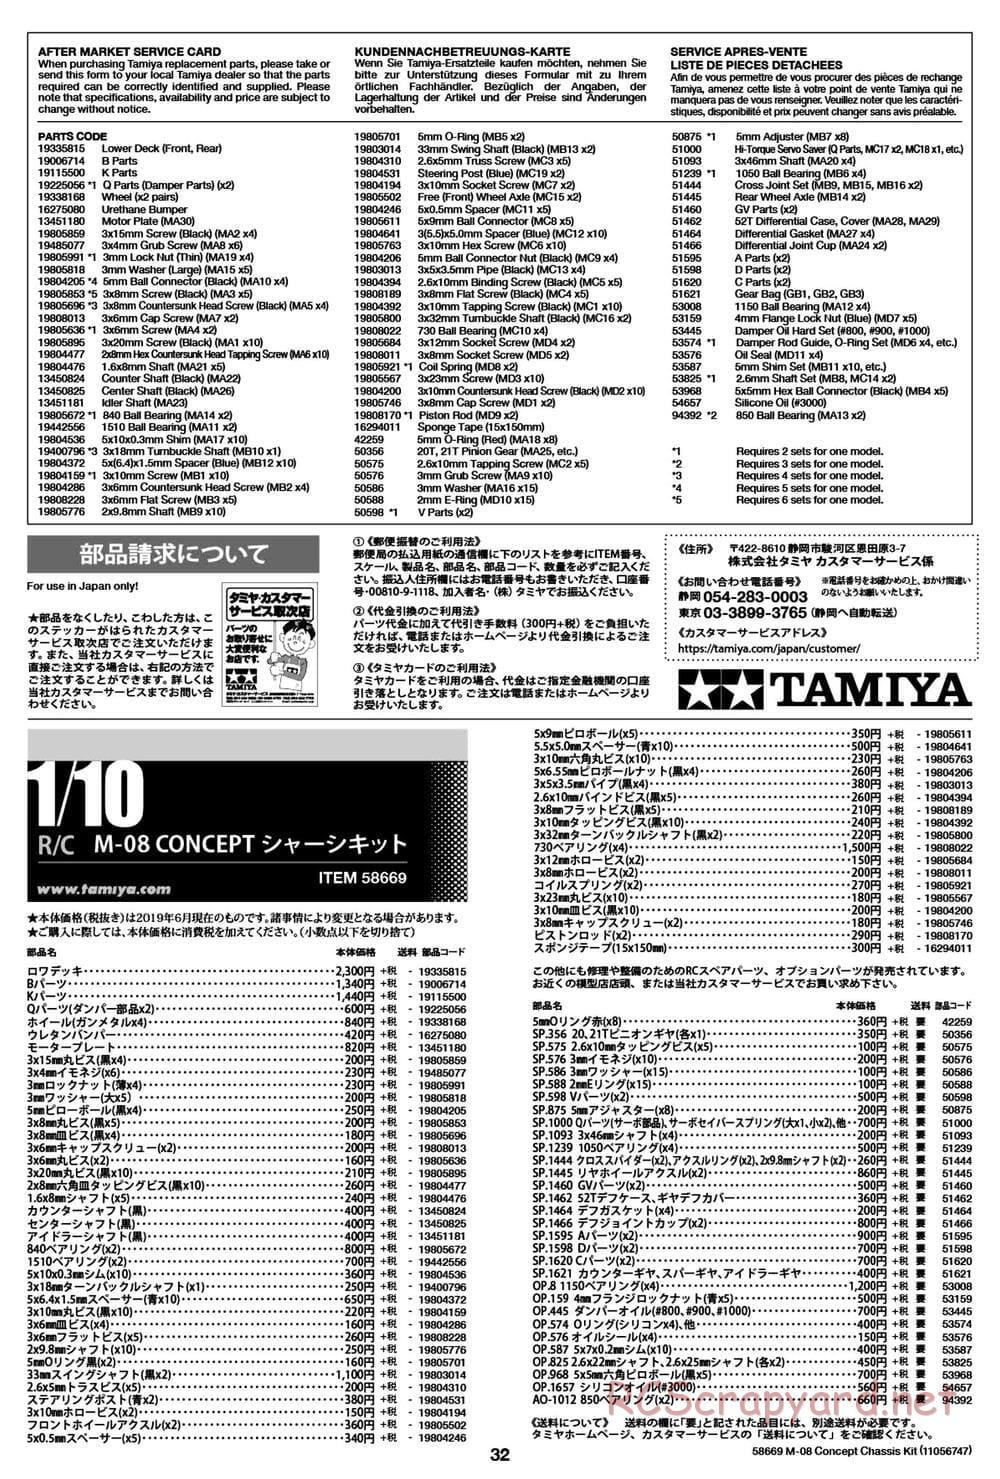 Tamiya - M-08 Concept Chassis - Manual - Page 32